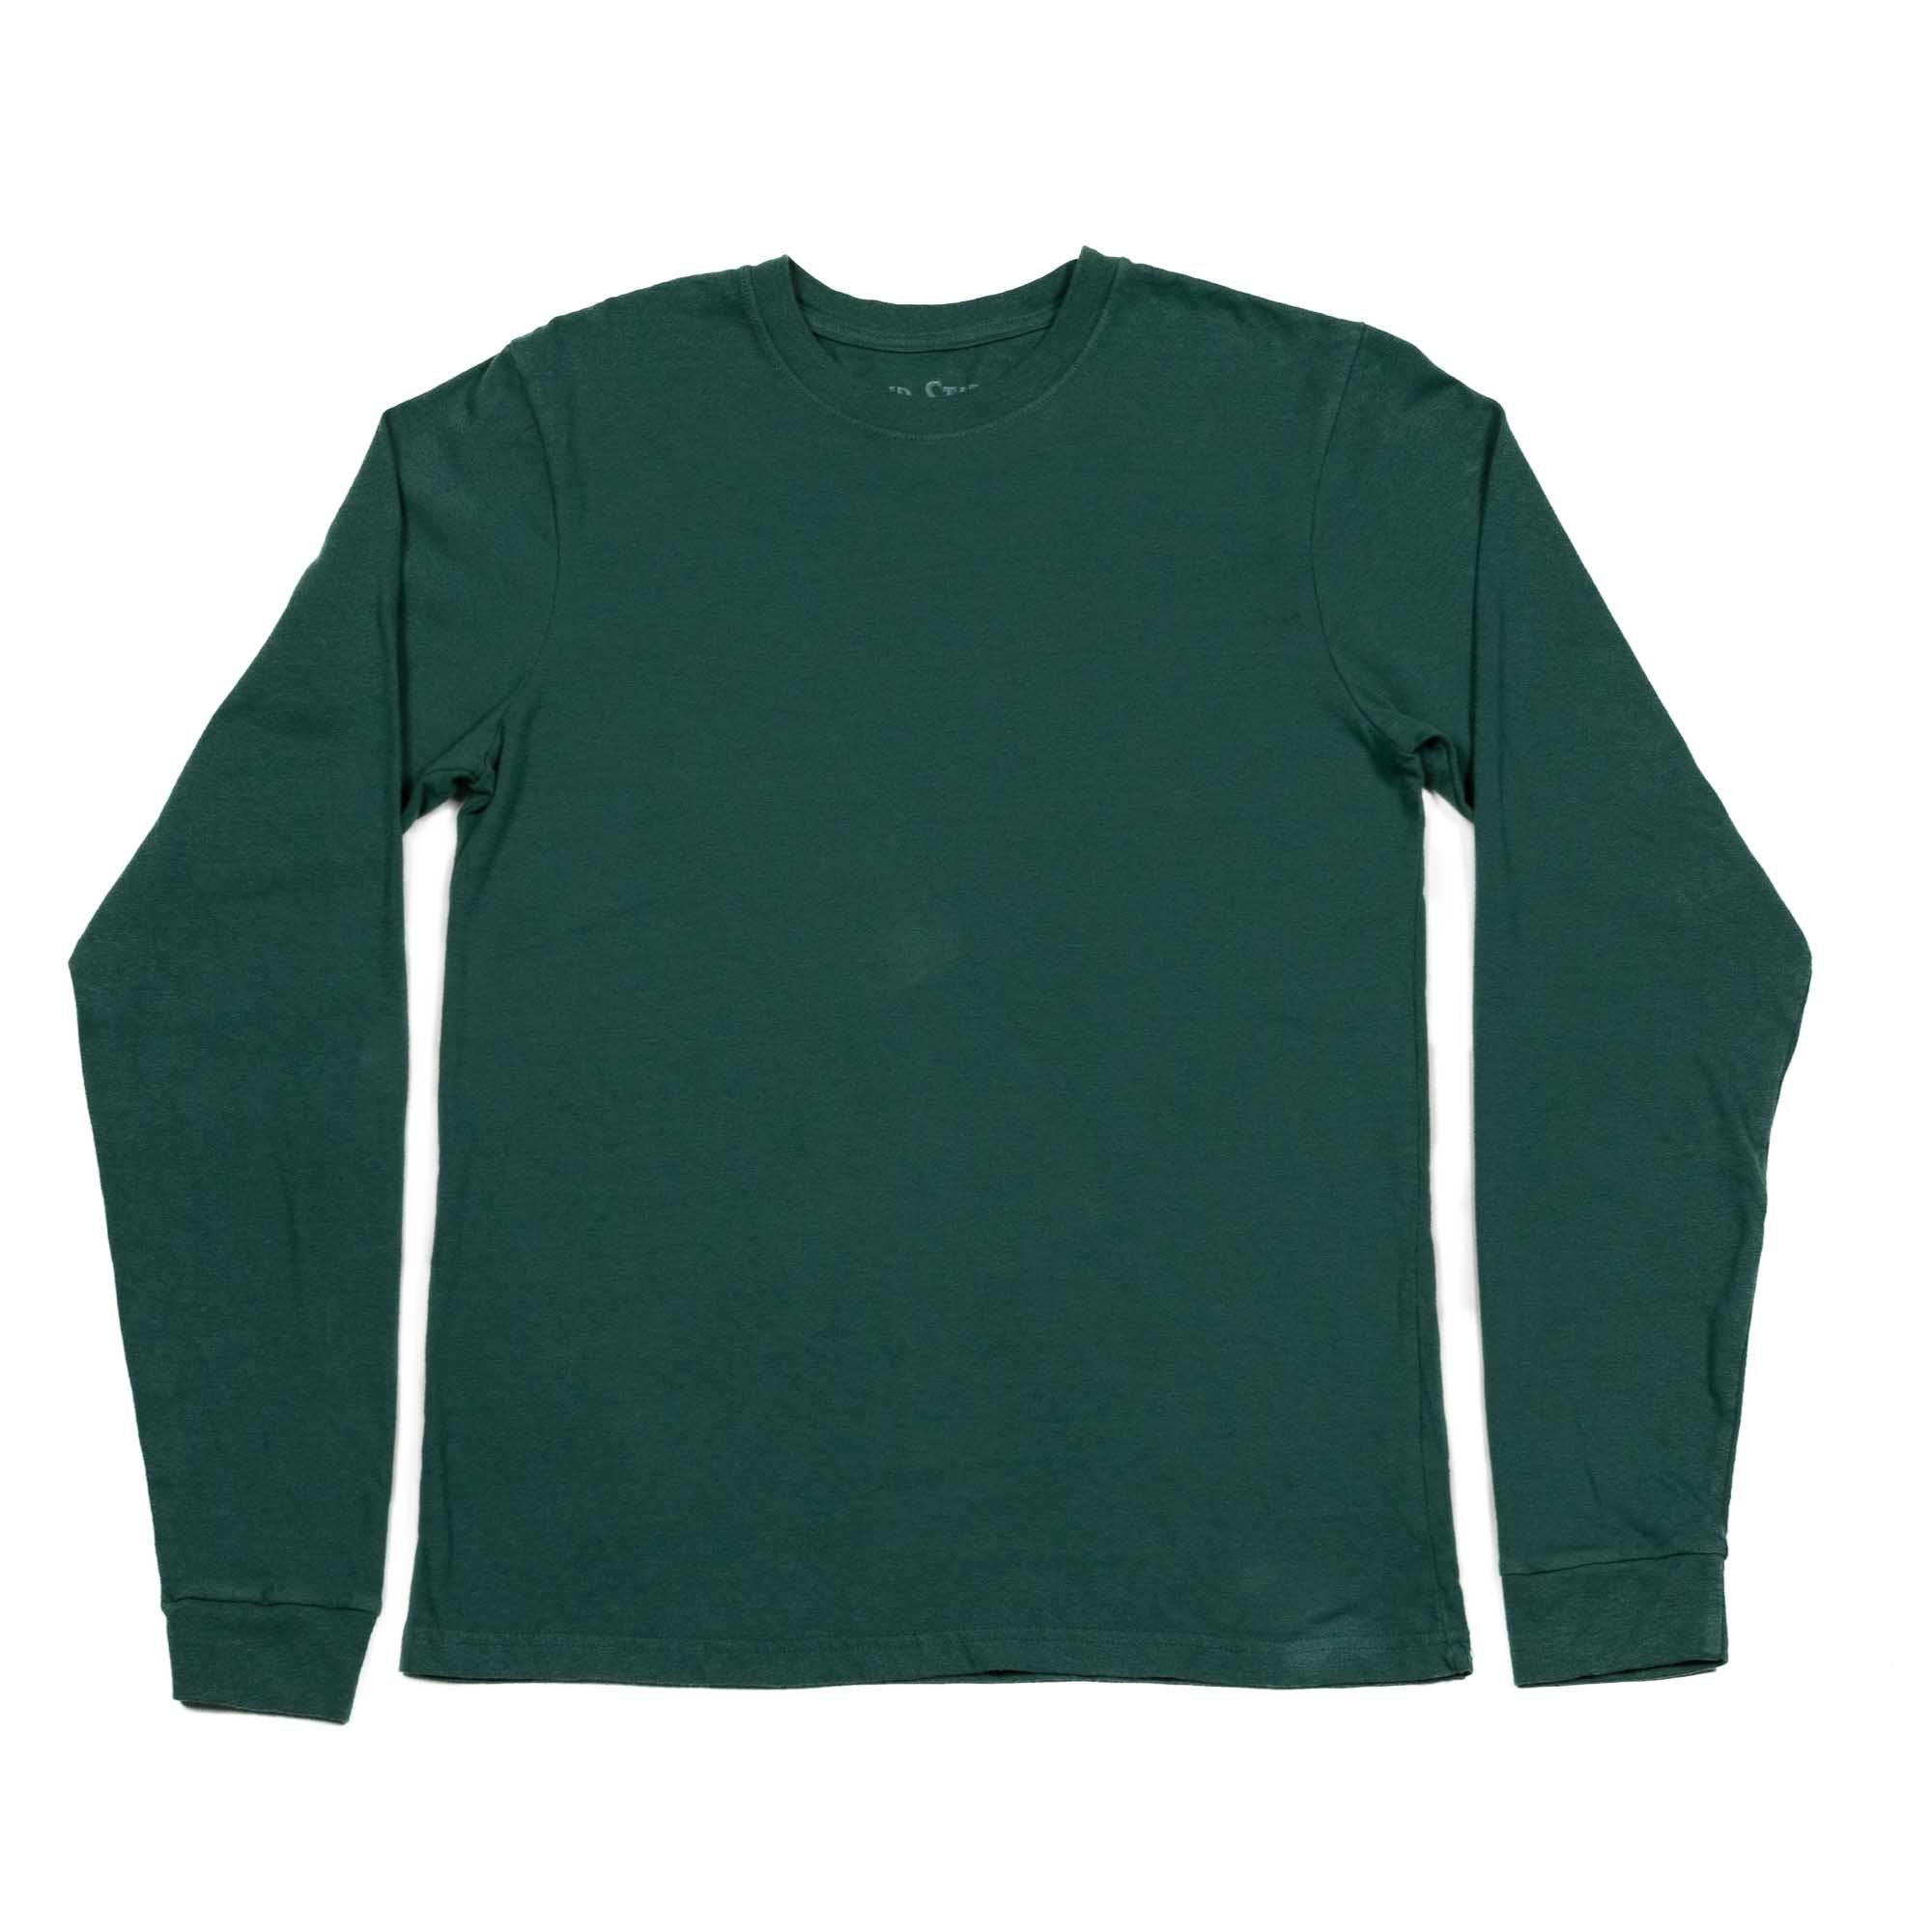 North Carolina Cotton Long Sleeve T-Shirt - Forest Green